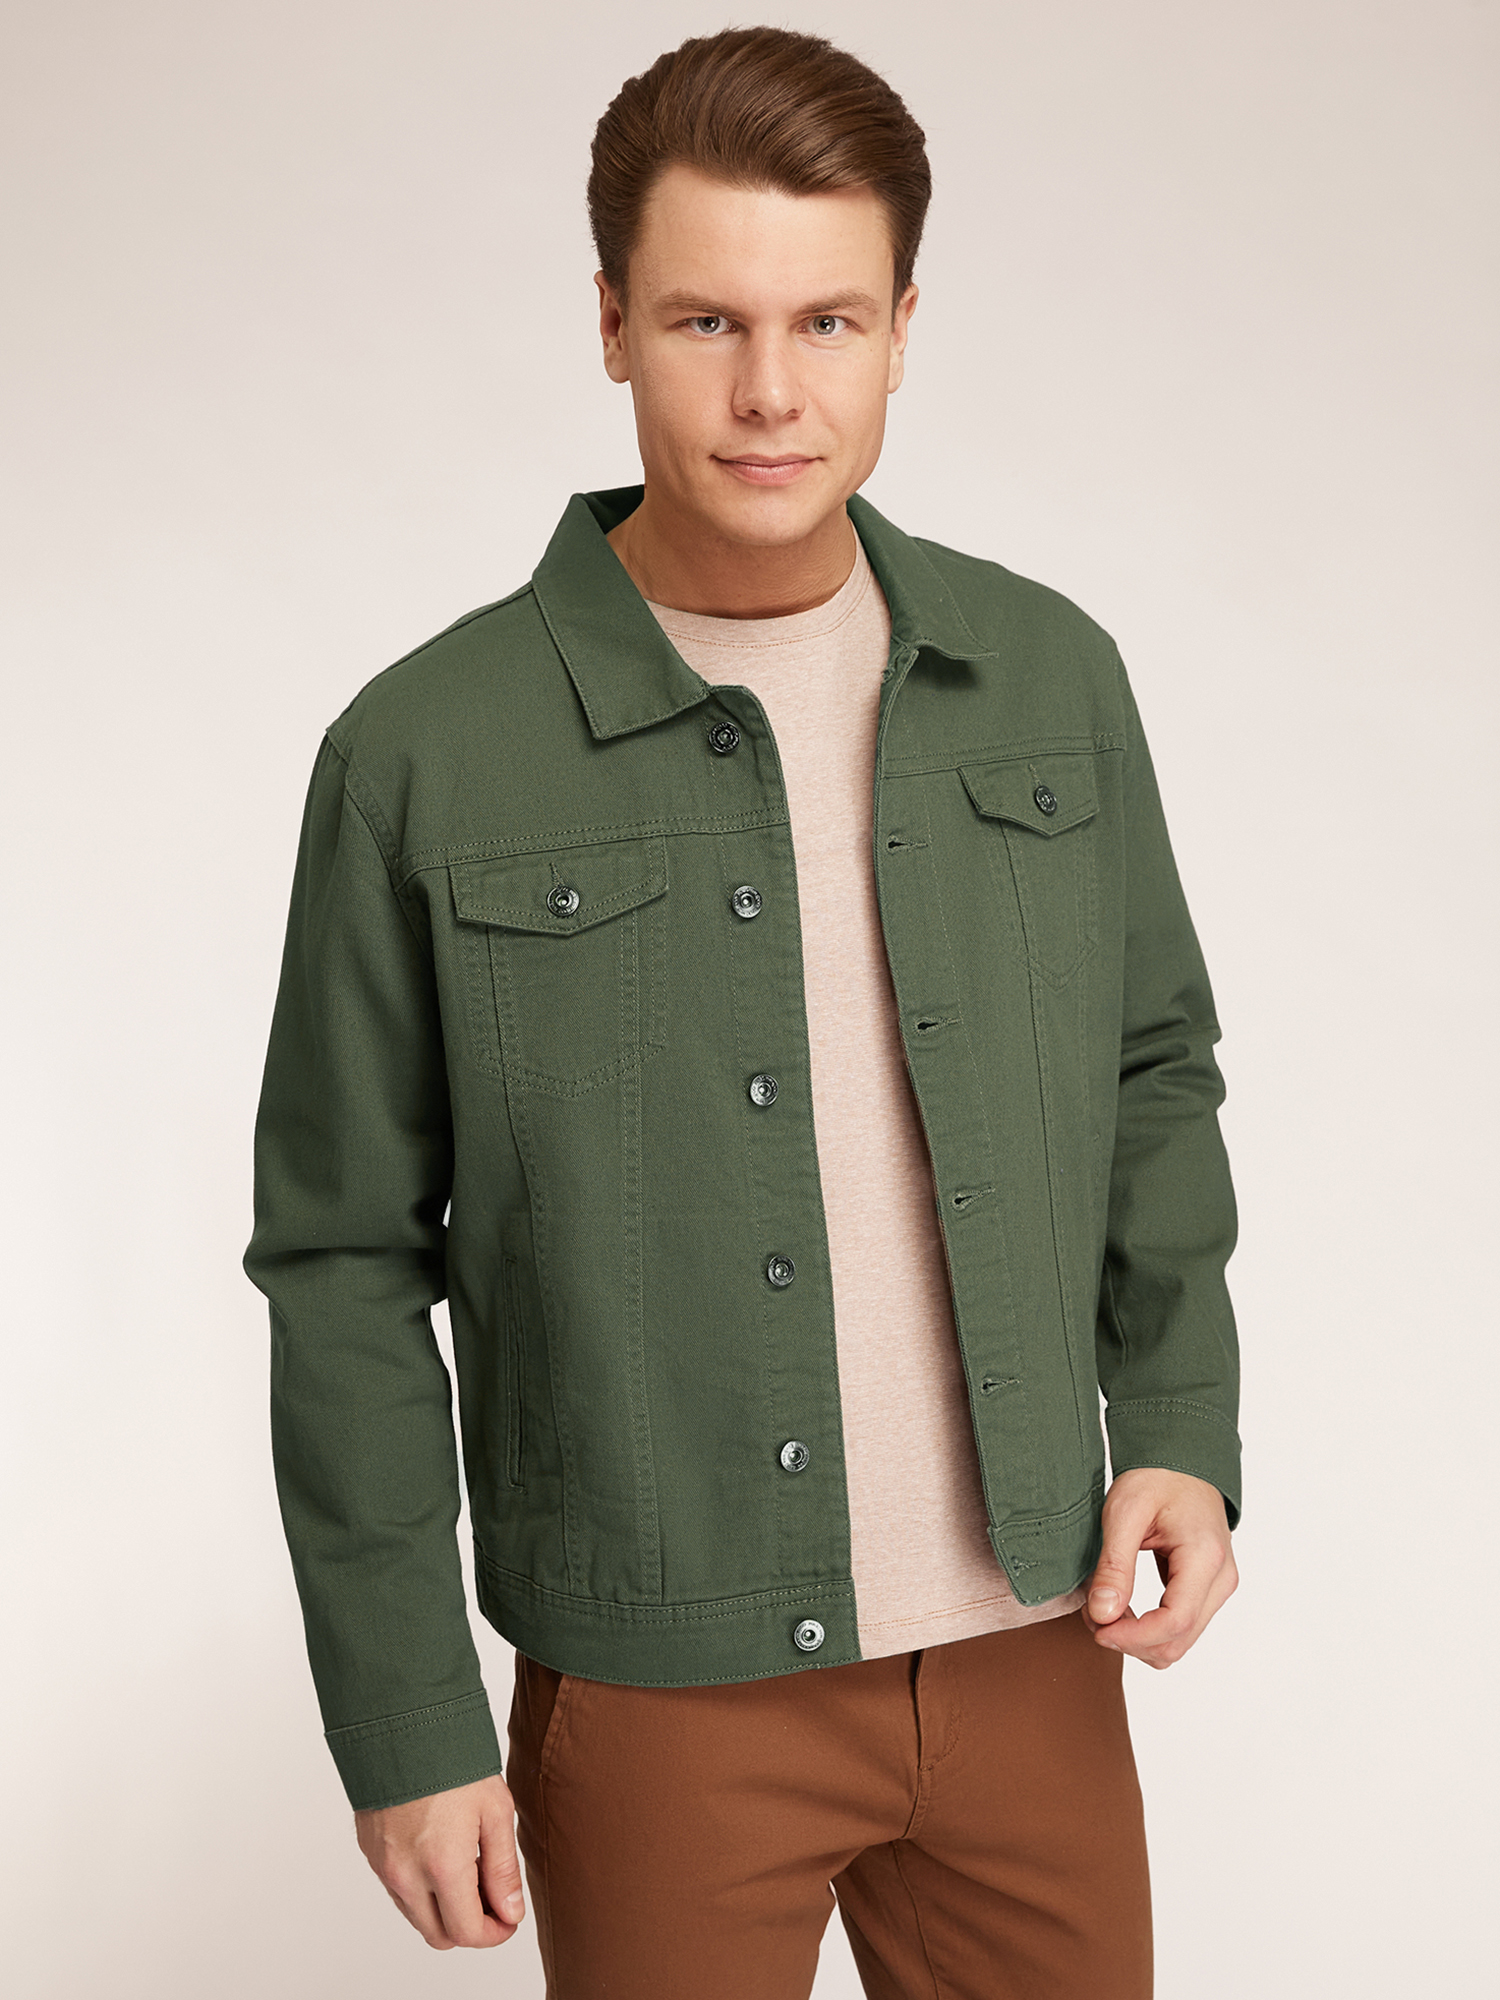 Джинсовая куртка мужская oodji 6L300011M зеленая S